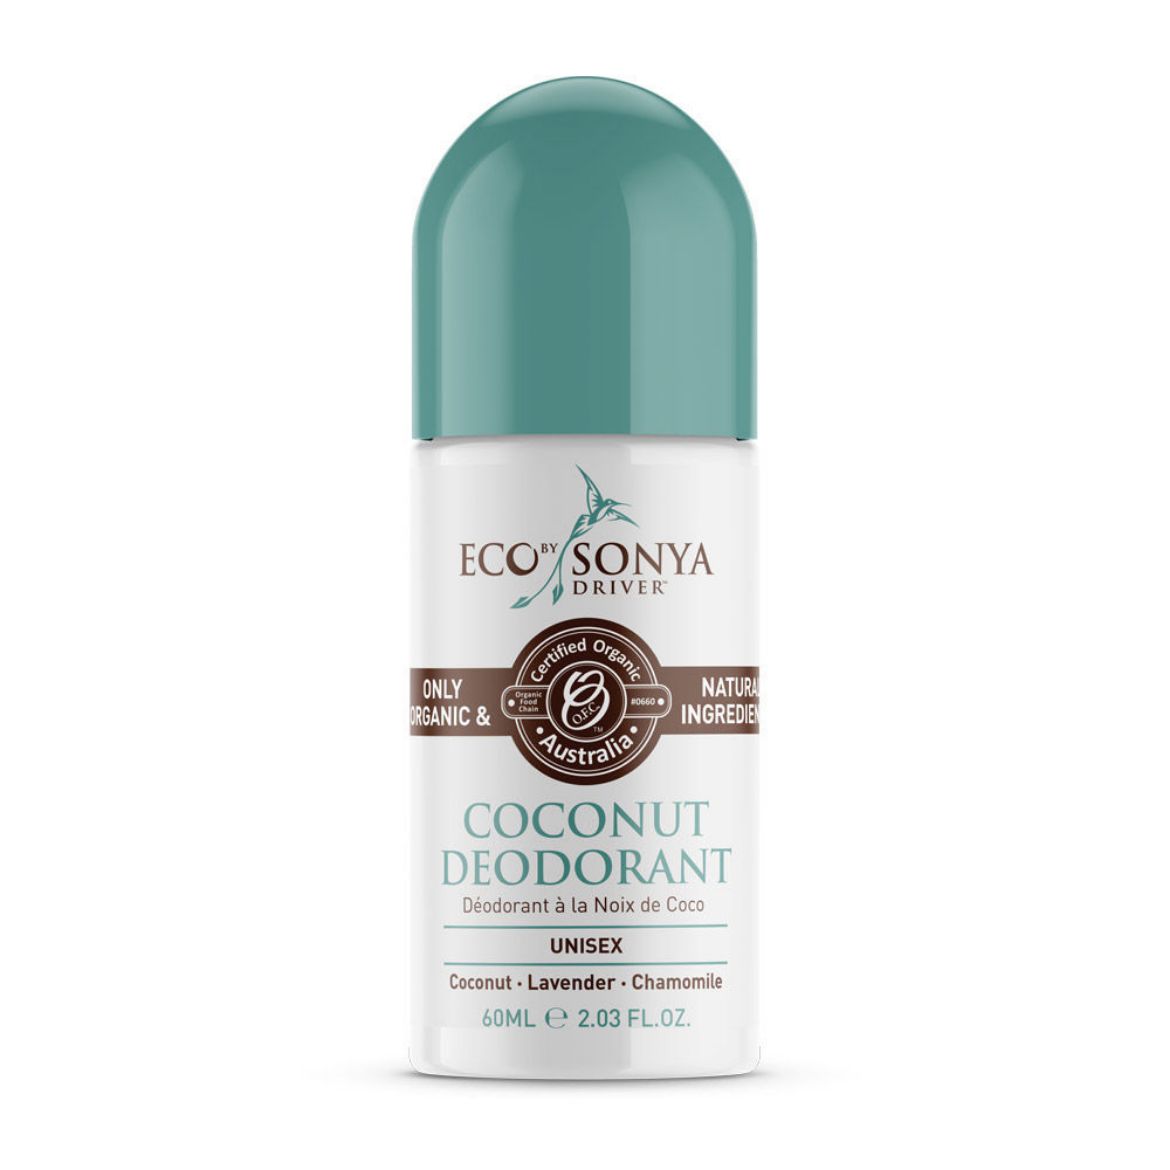 Image of Eco by Sonya Coconut Deodorant (60ml)